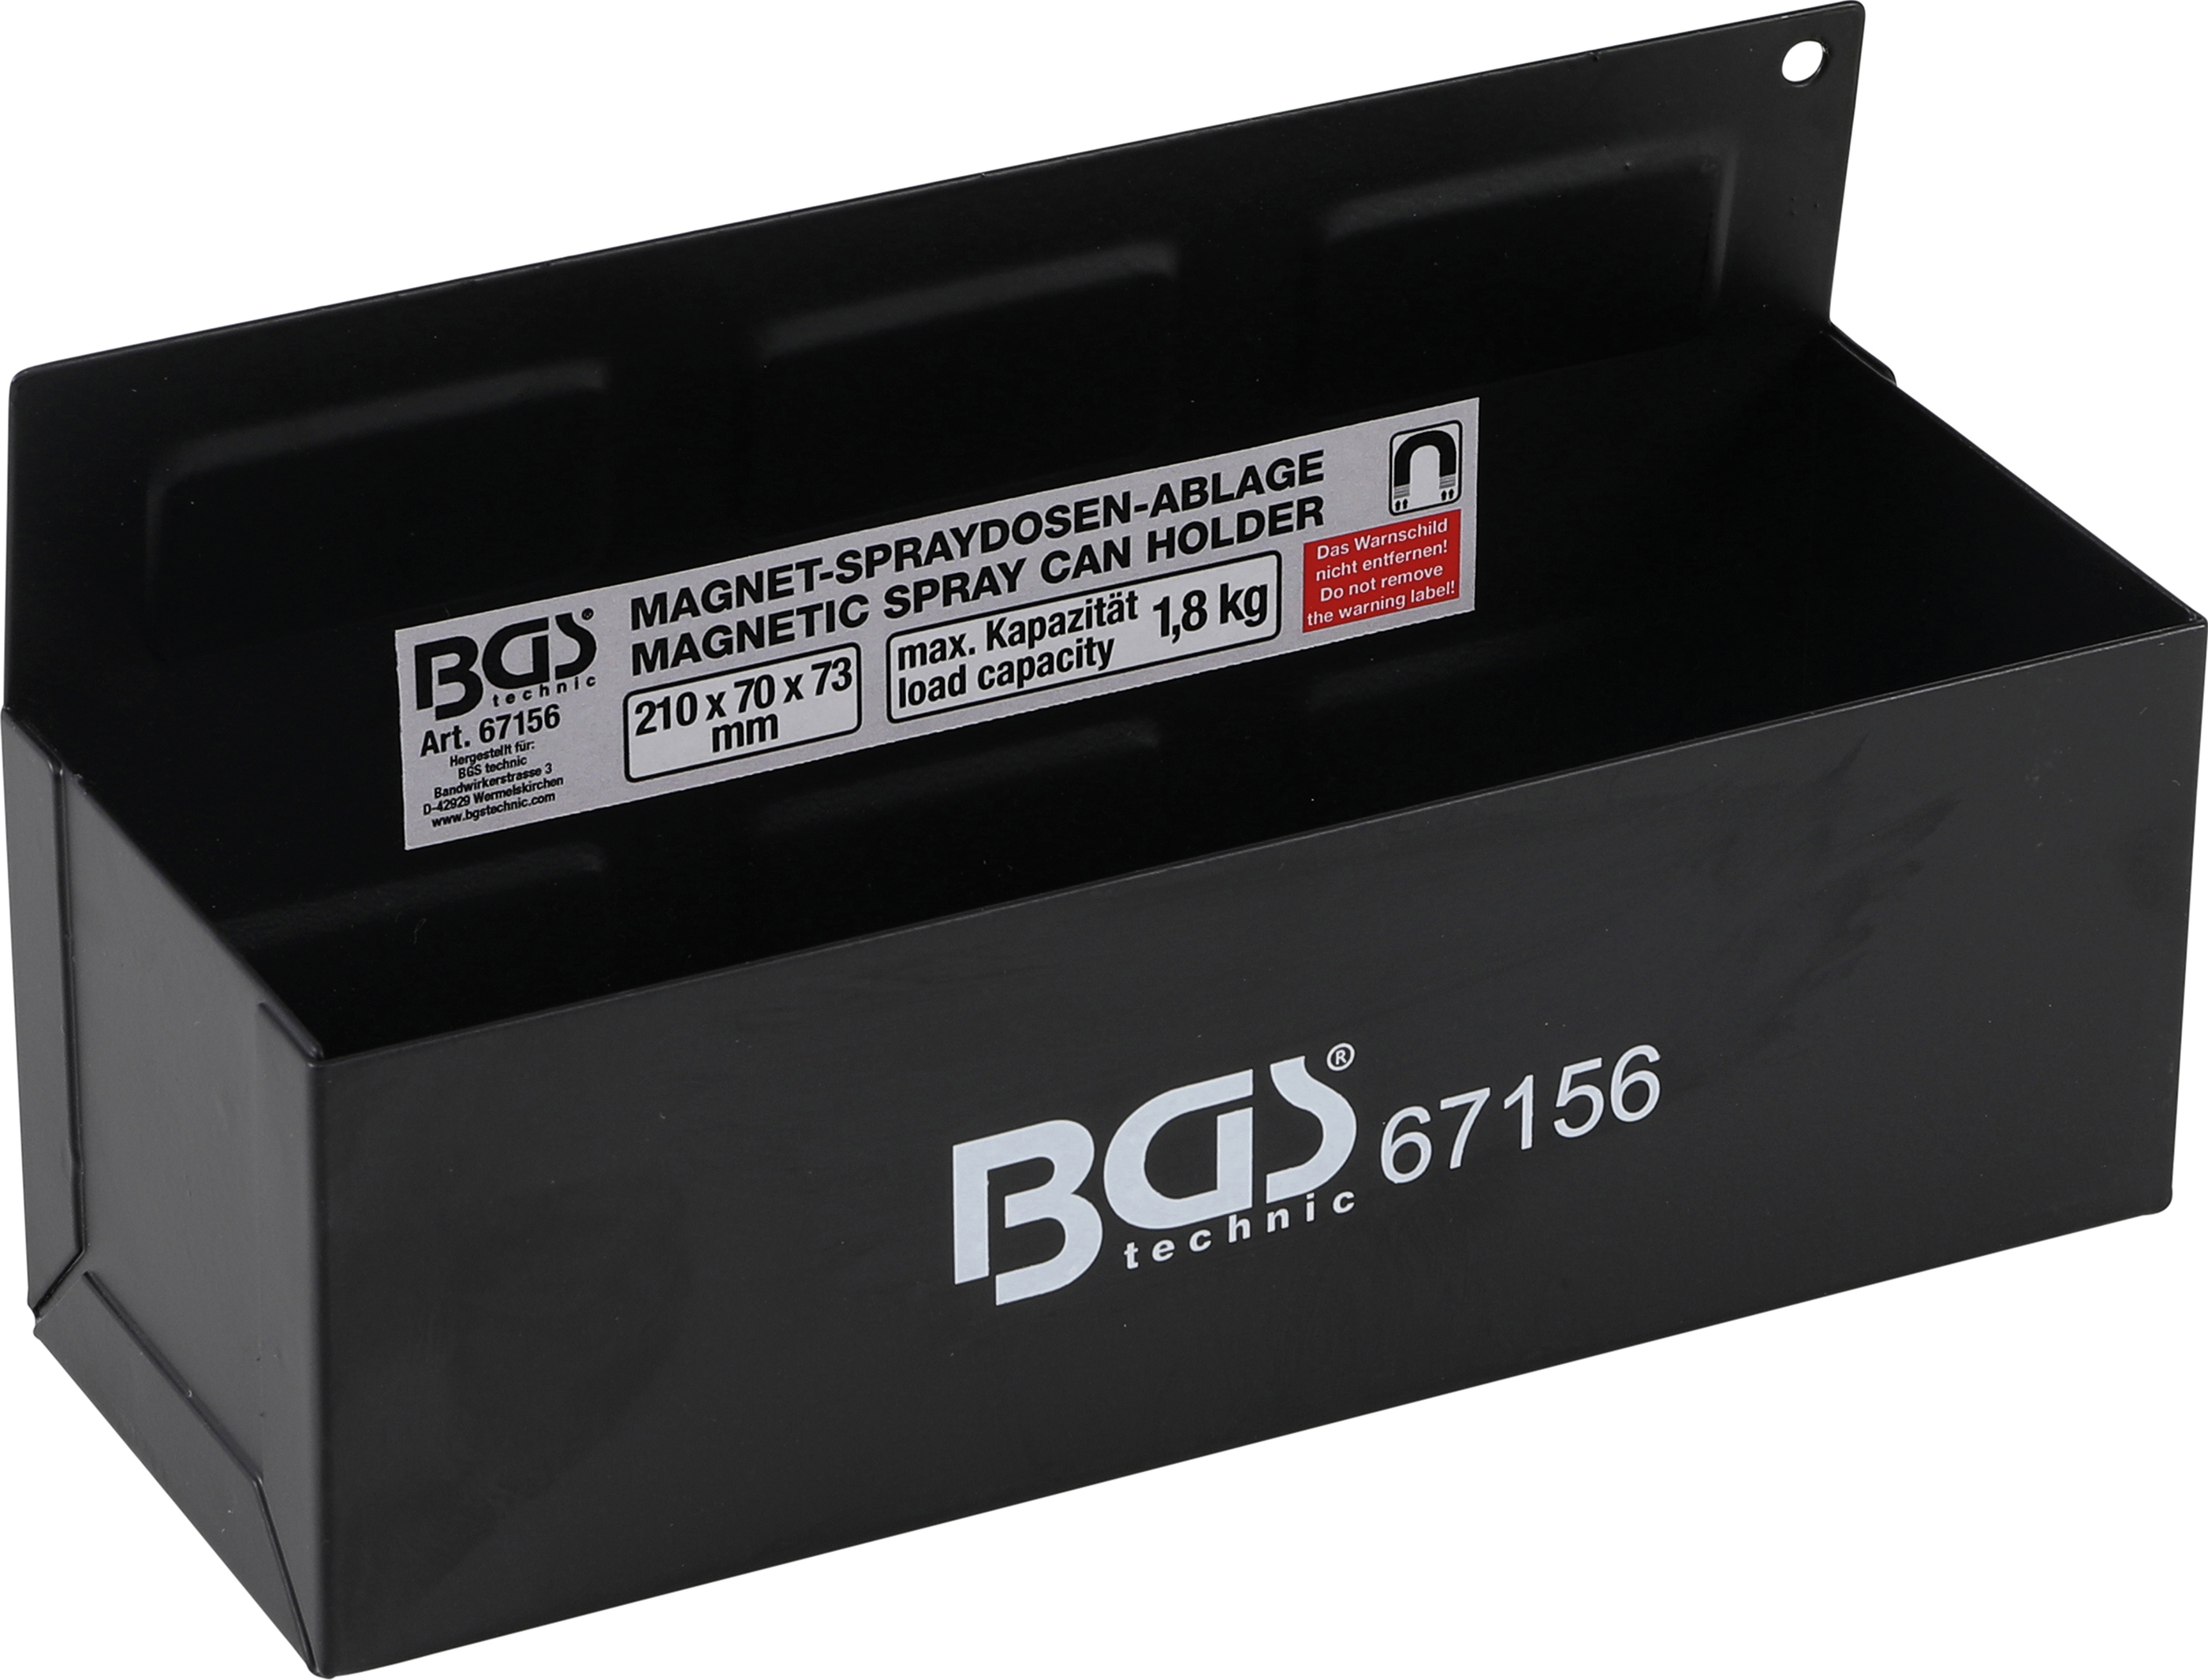 BGS 67156 Tavita magnetica pentru recipiente